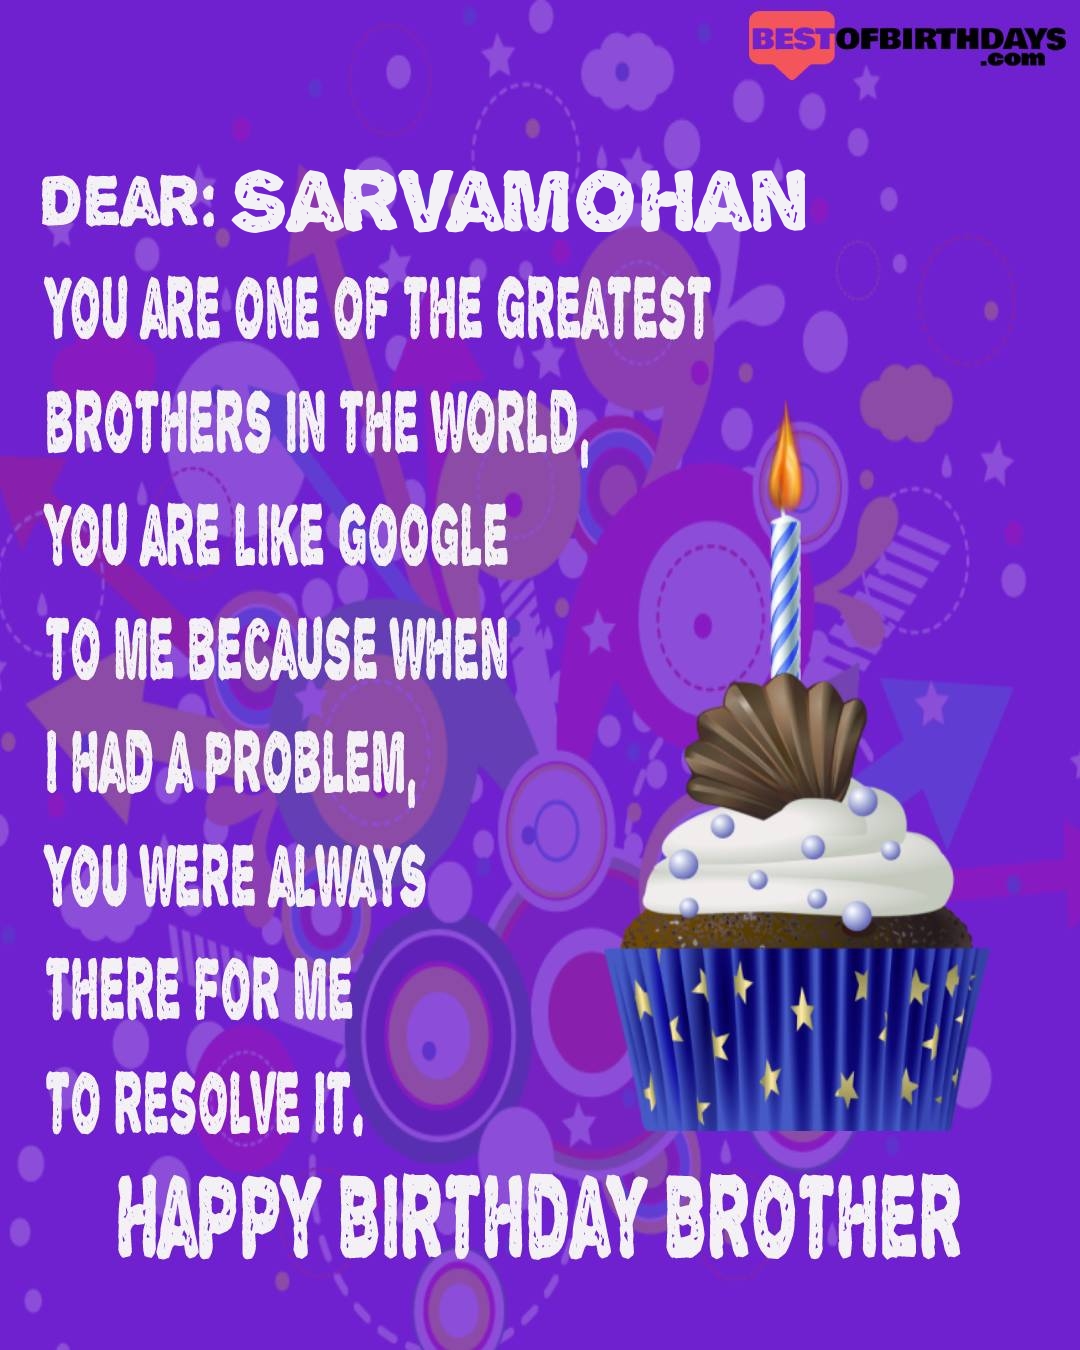 Happy birthday sarvamohan bhai brother bro